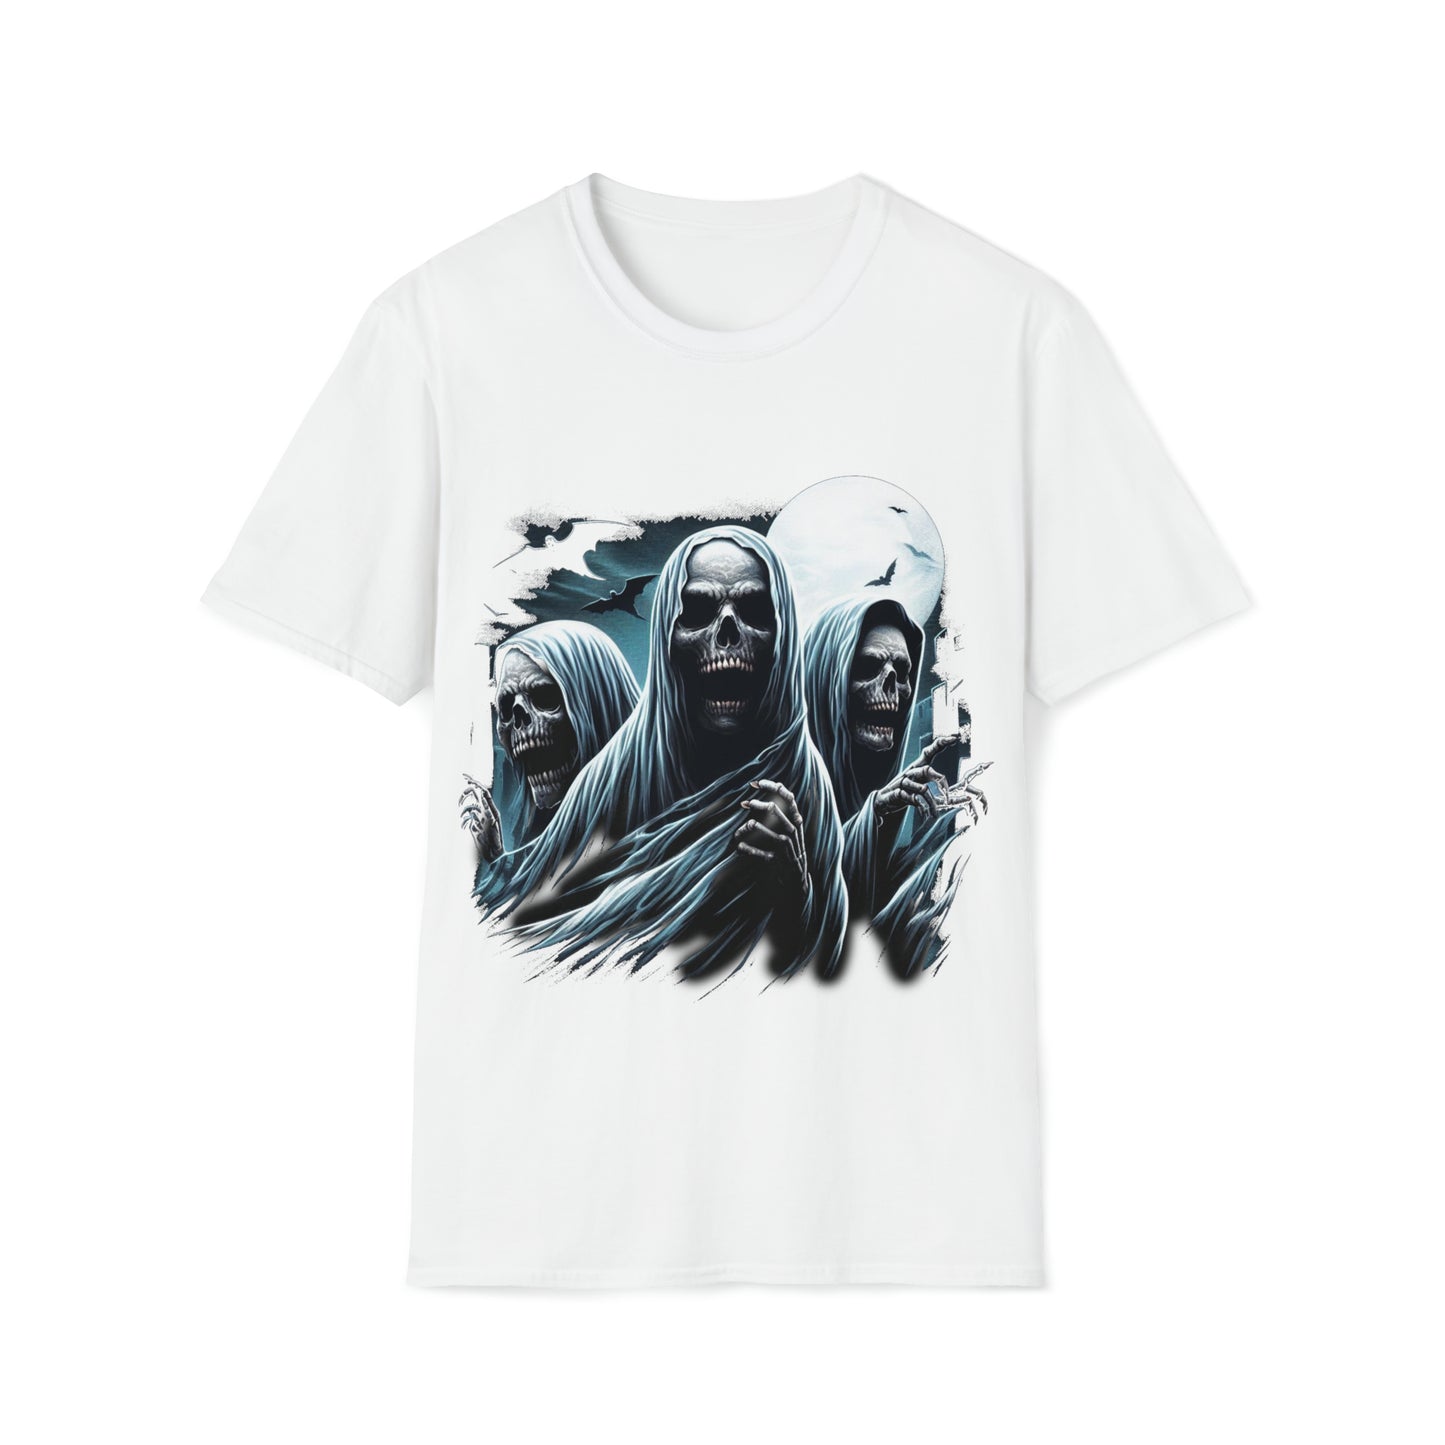 Halloween Ghosts T-Shirt - Spirits of the Spooky Season